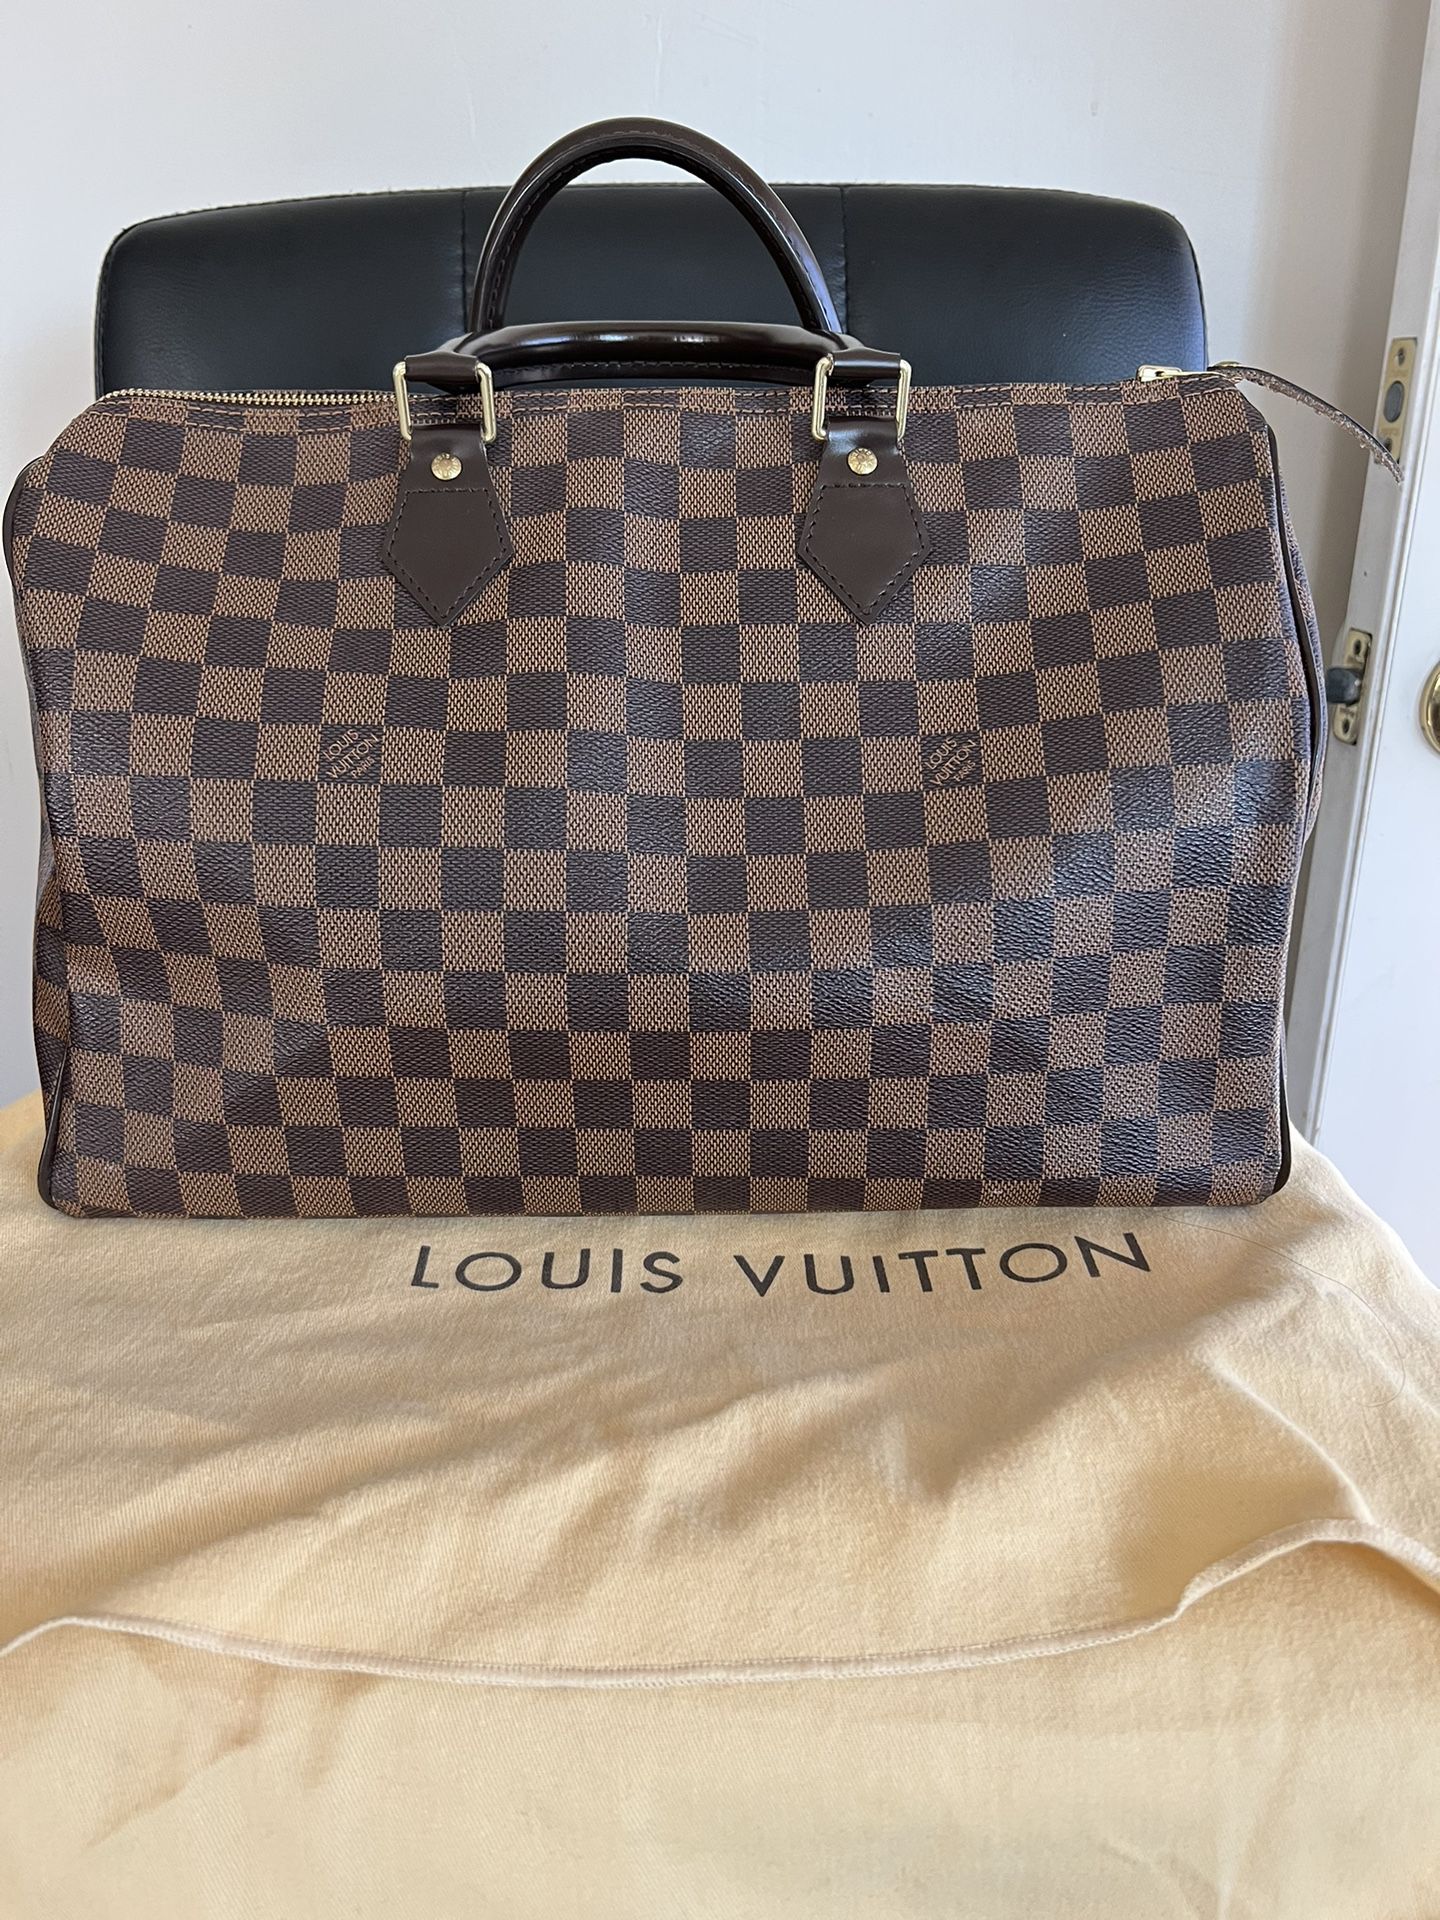 Louis Vuitton Speedy 35 bando for Sale in Huntington Beach, CA - OfferUp